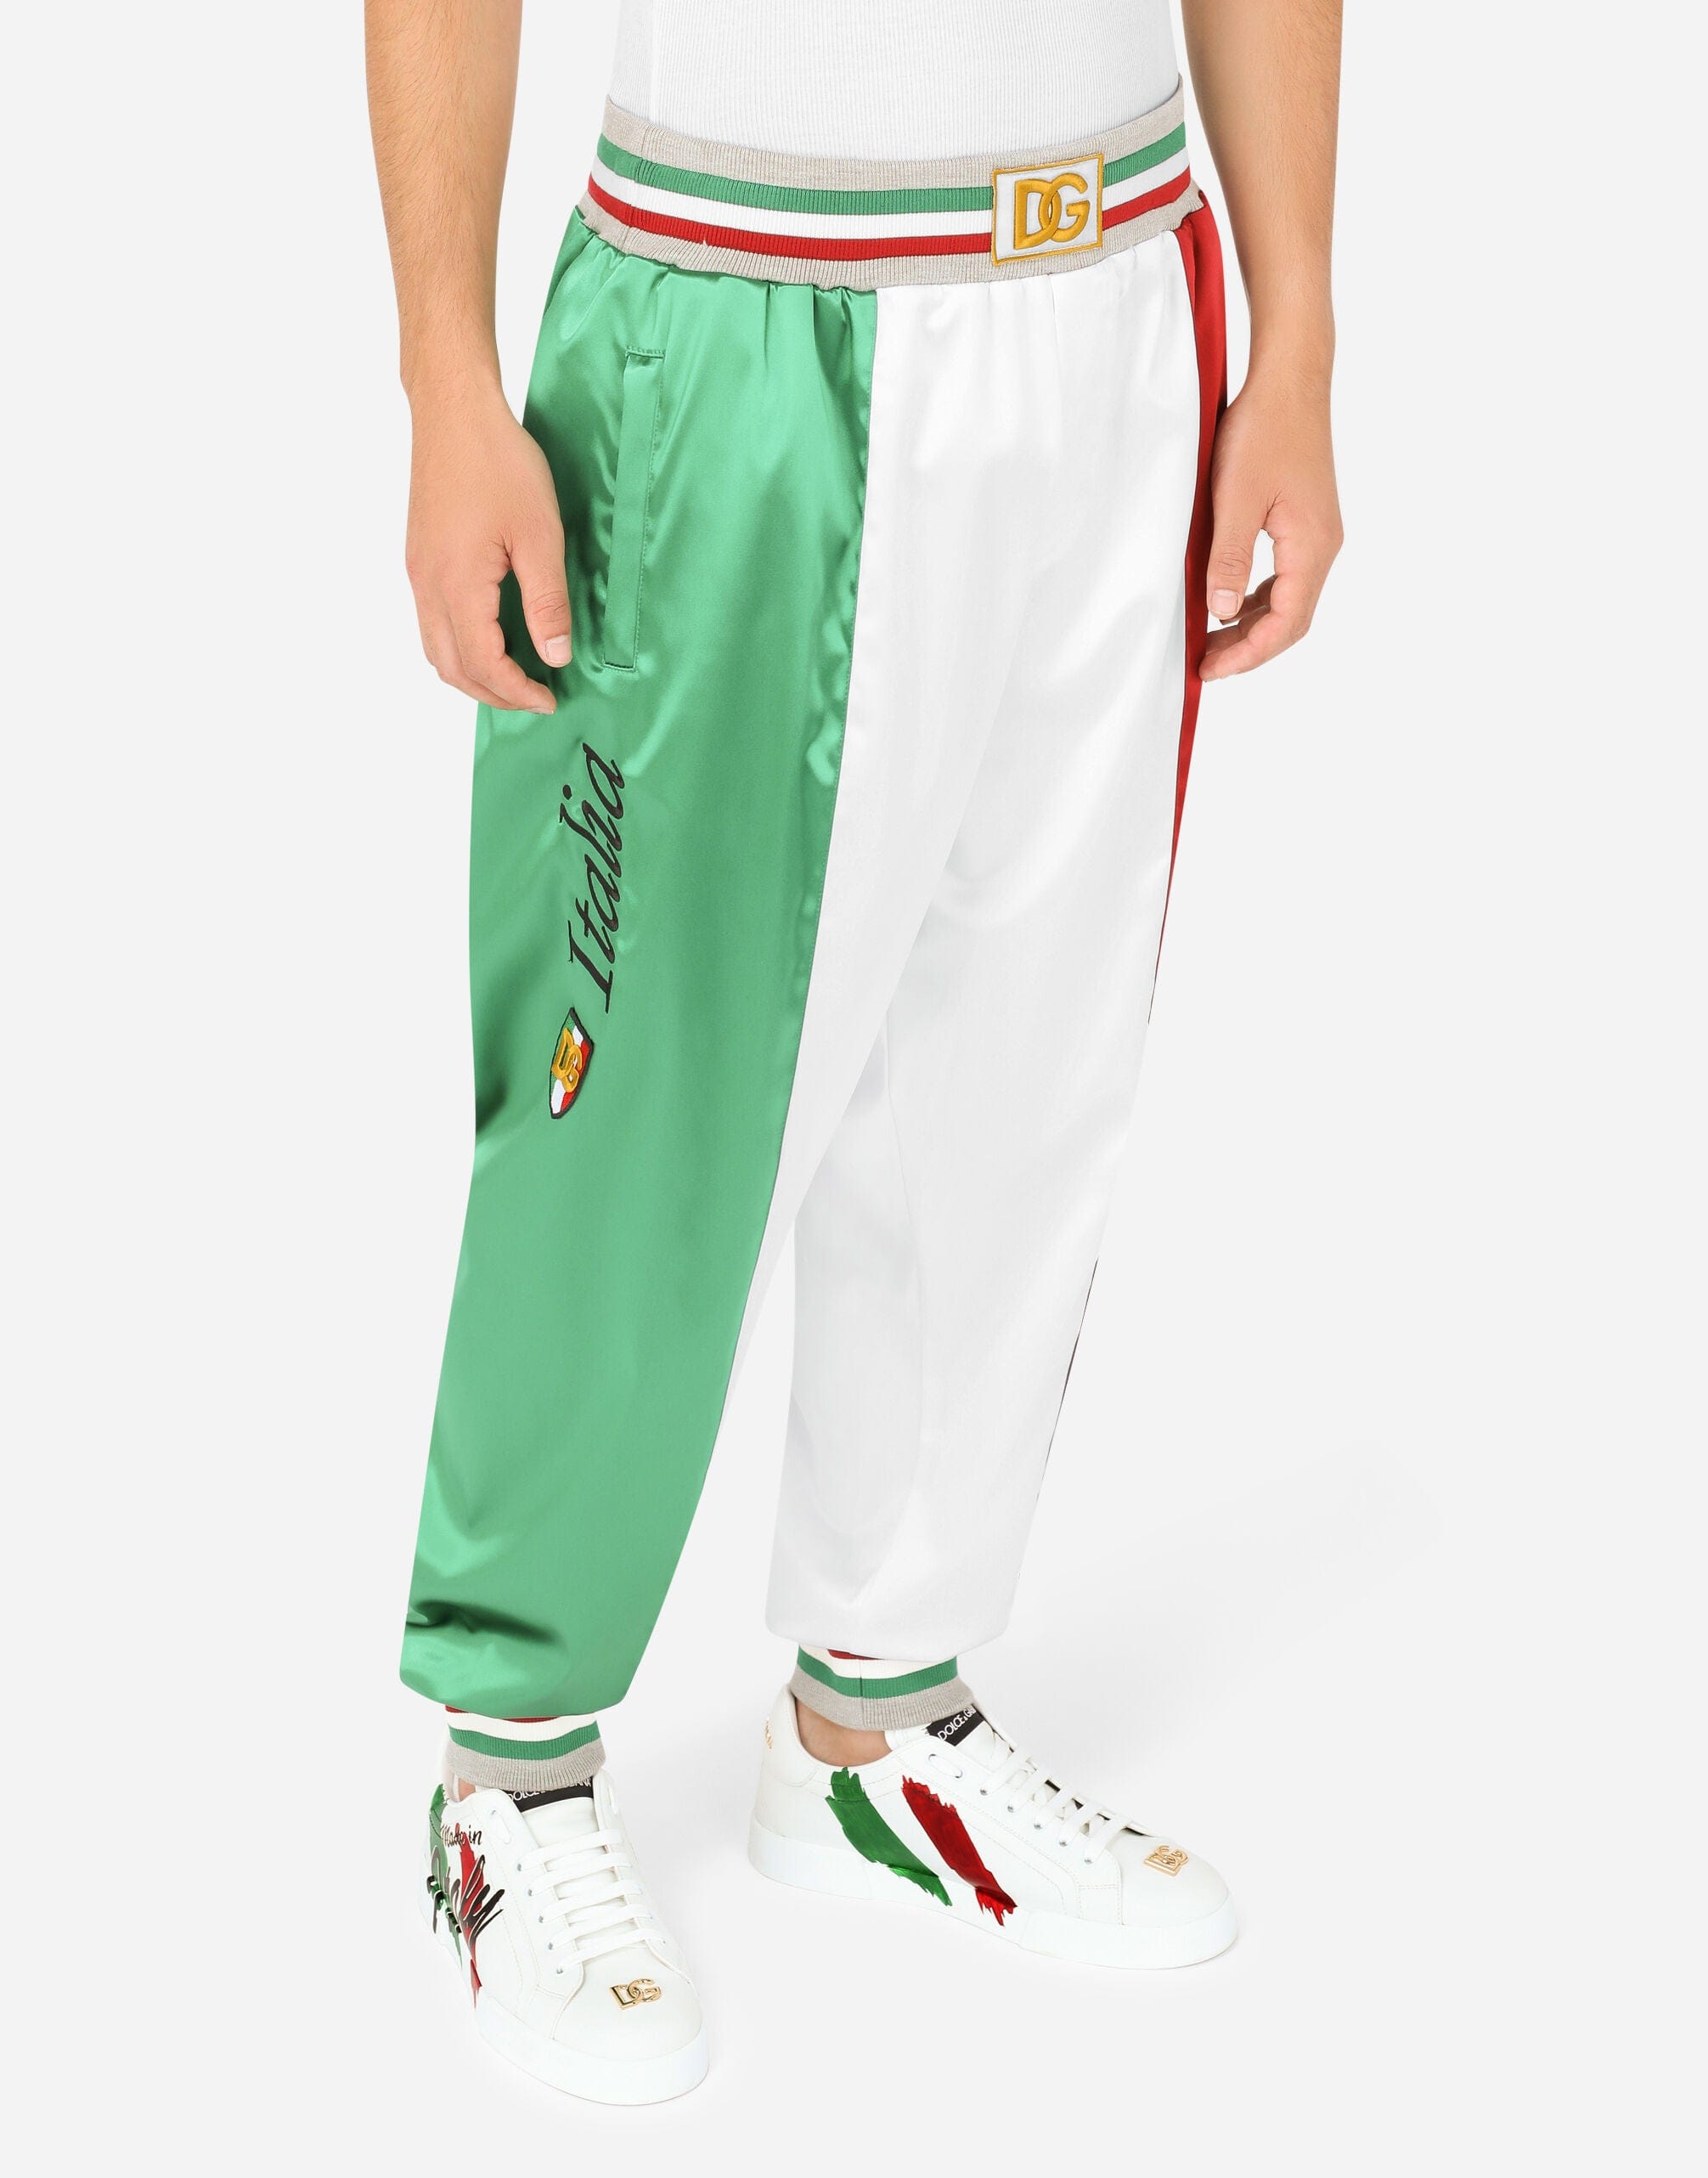 Dolce & Gabbana Satin Jogging Pants With DG Patch